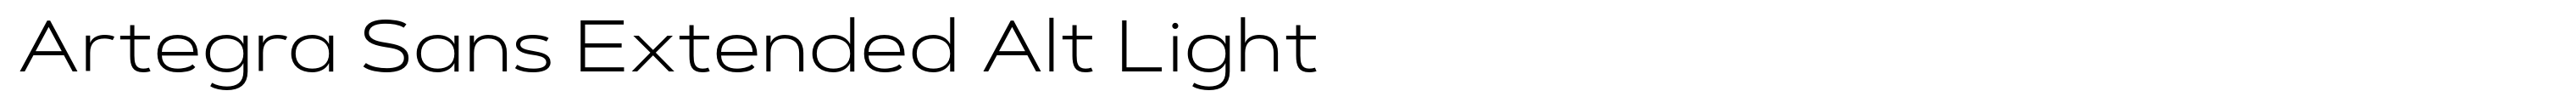 Artegra Sans Extended Alt Light